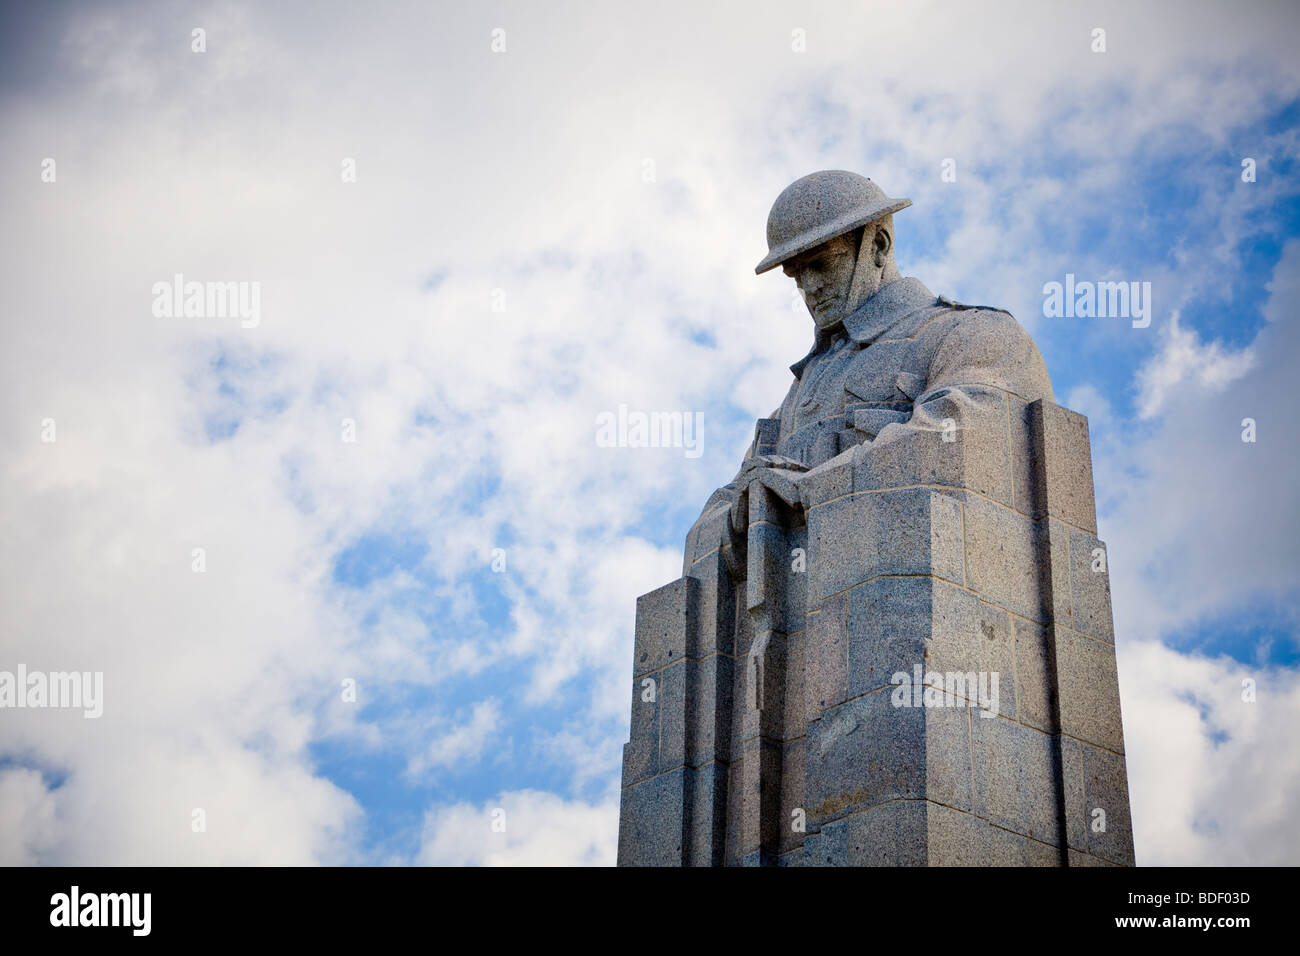 St Julien Kriegerdenkmal nach dem 1. Weltkrieg kanadische Infanterie, Ypern, Flandern, Belgien, Europa Stockfoto